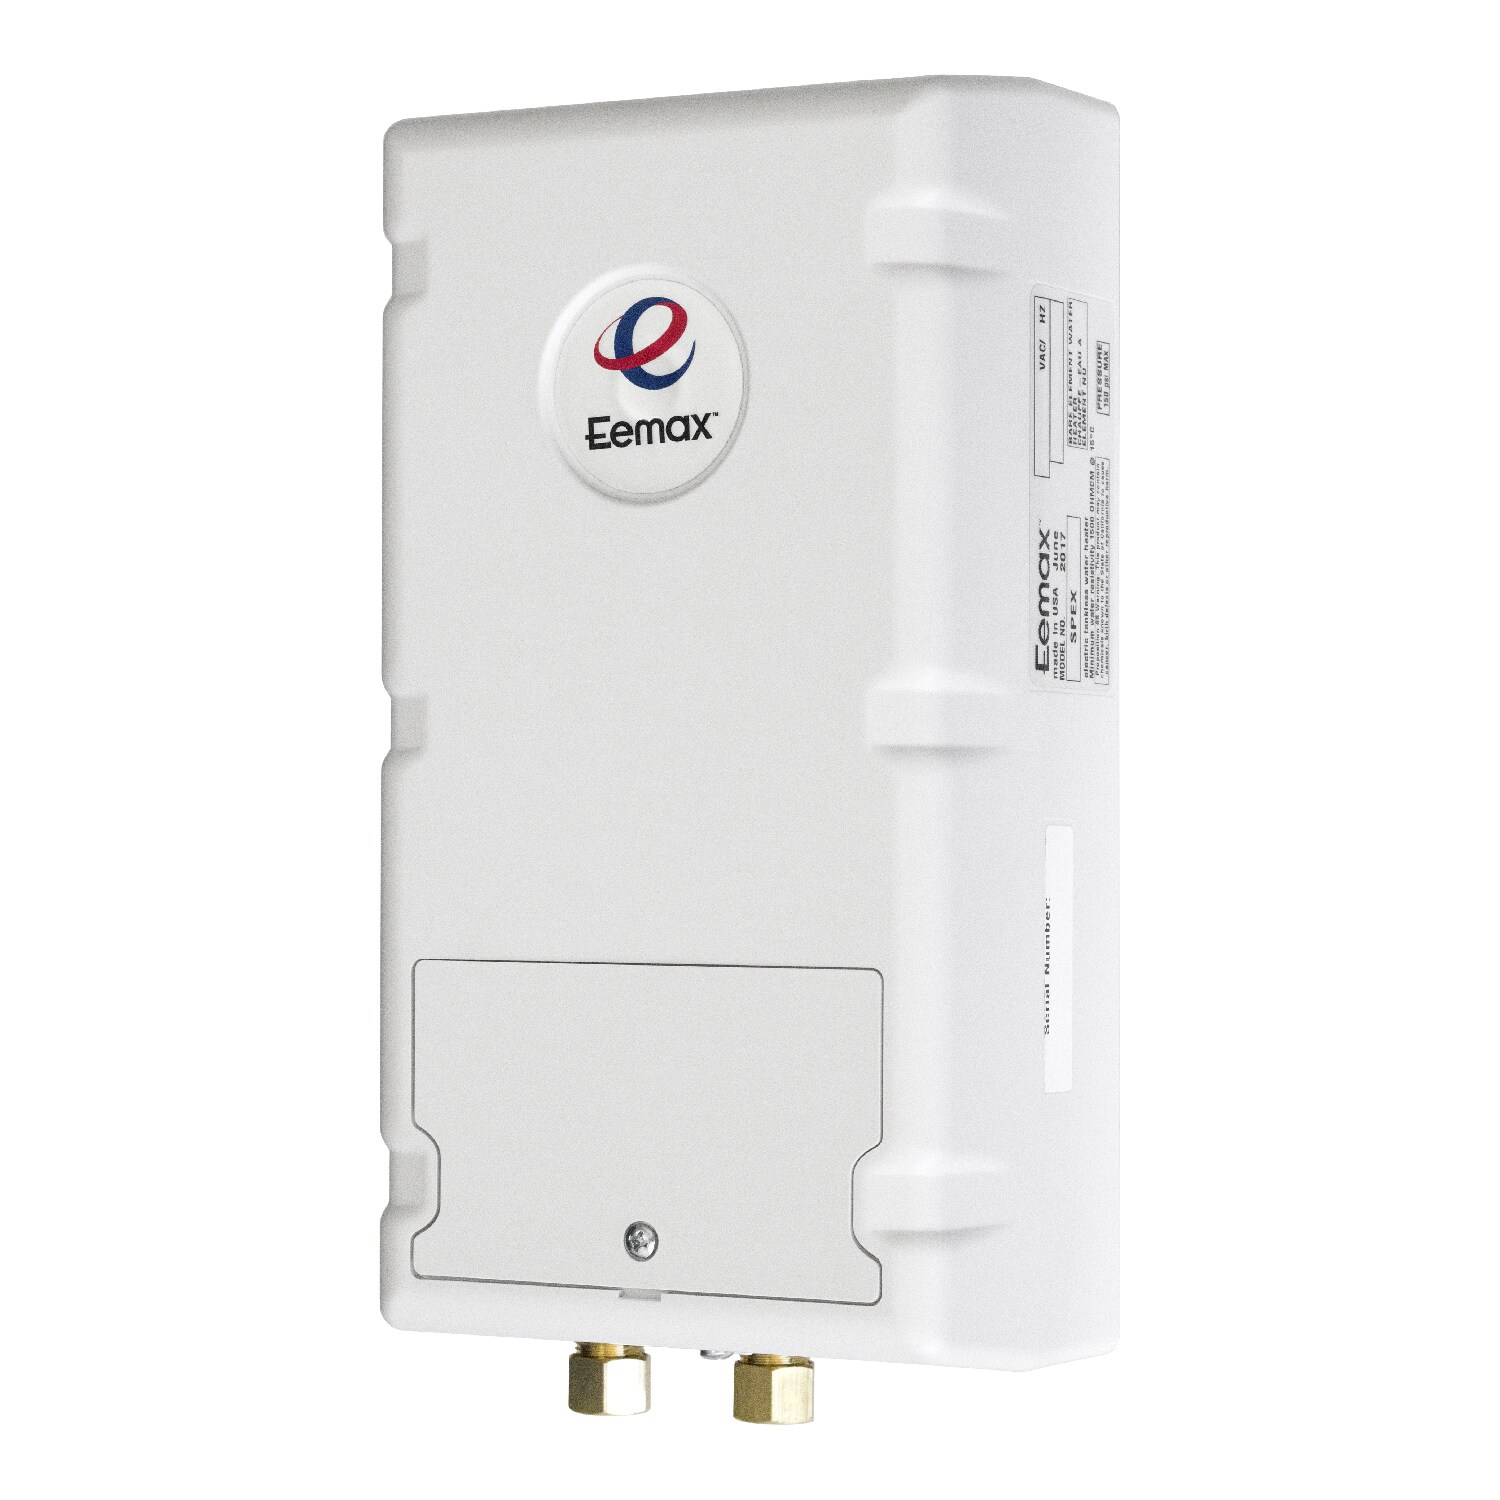 Eemax LavAdvantage SPEX95T Point-of-Use Water Heater